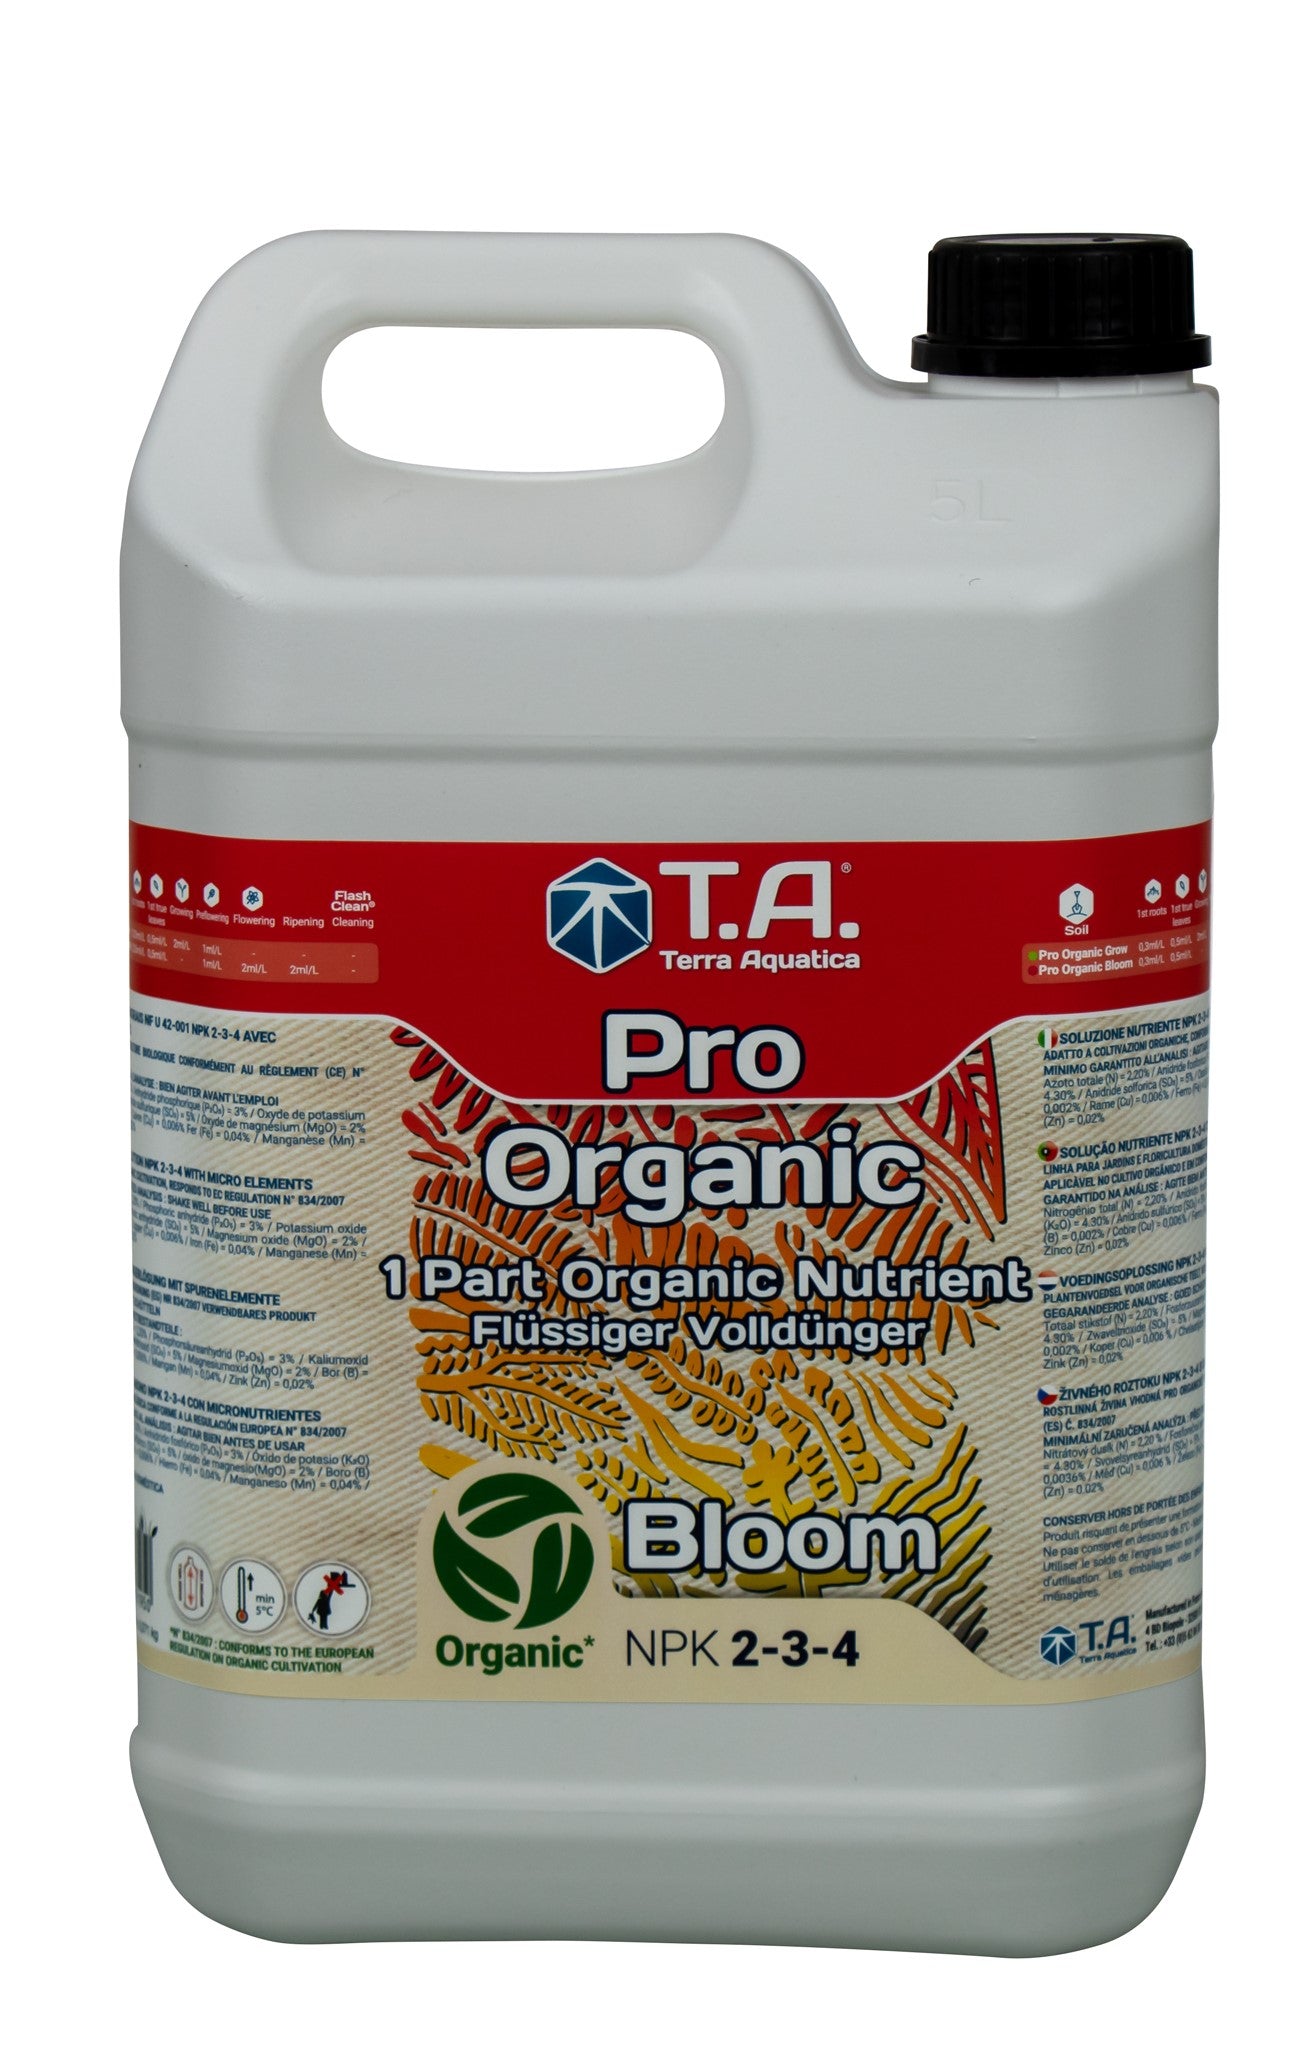 Pro Organic Bloom - პრო ორგანიკ ბლუმი